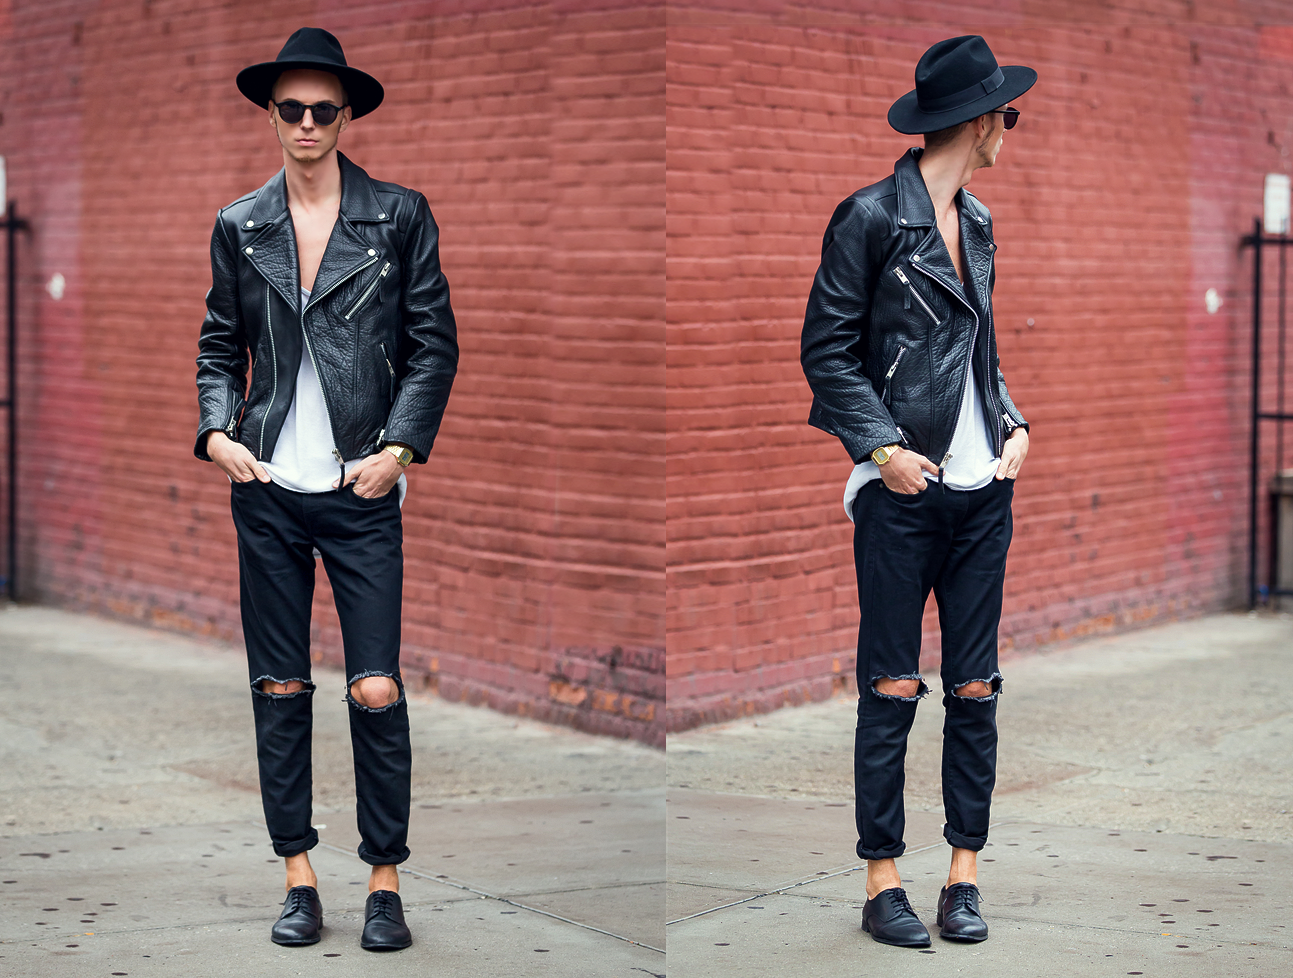 new-york-city-fashion-week-2014-street-style-menswear-leather-bikerjacket-fedora-hat-ferfidivat-nyc-fashion-blogger-_8_.png